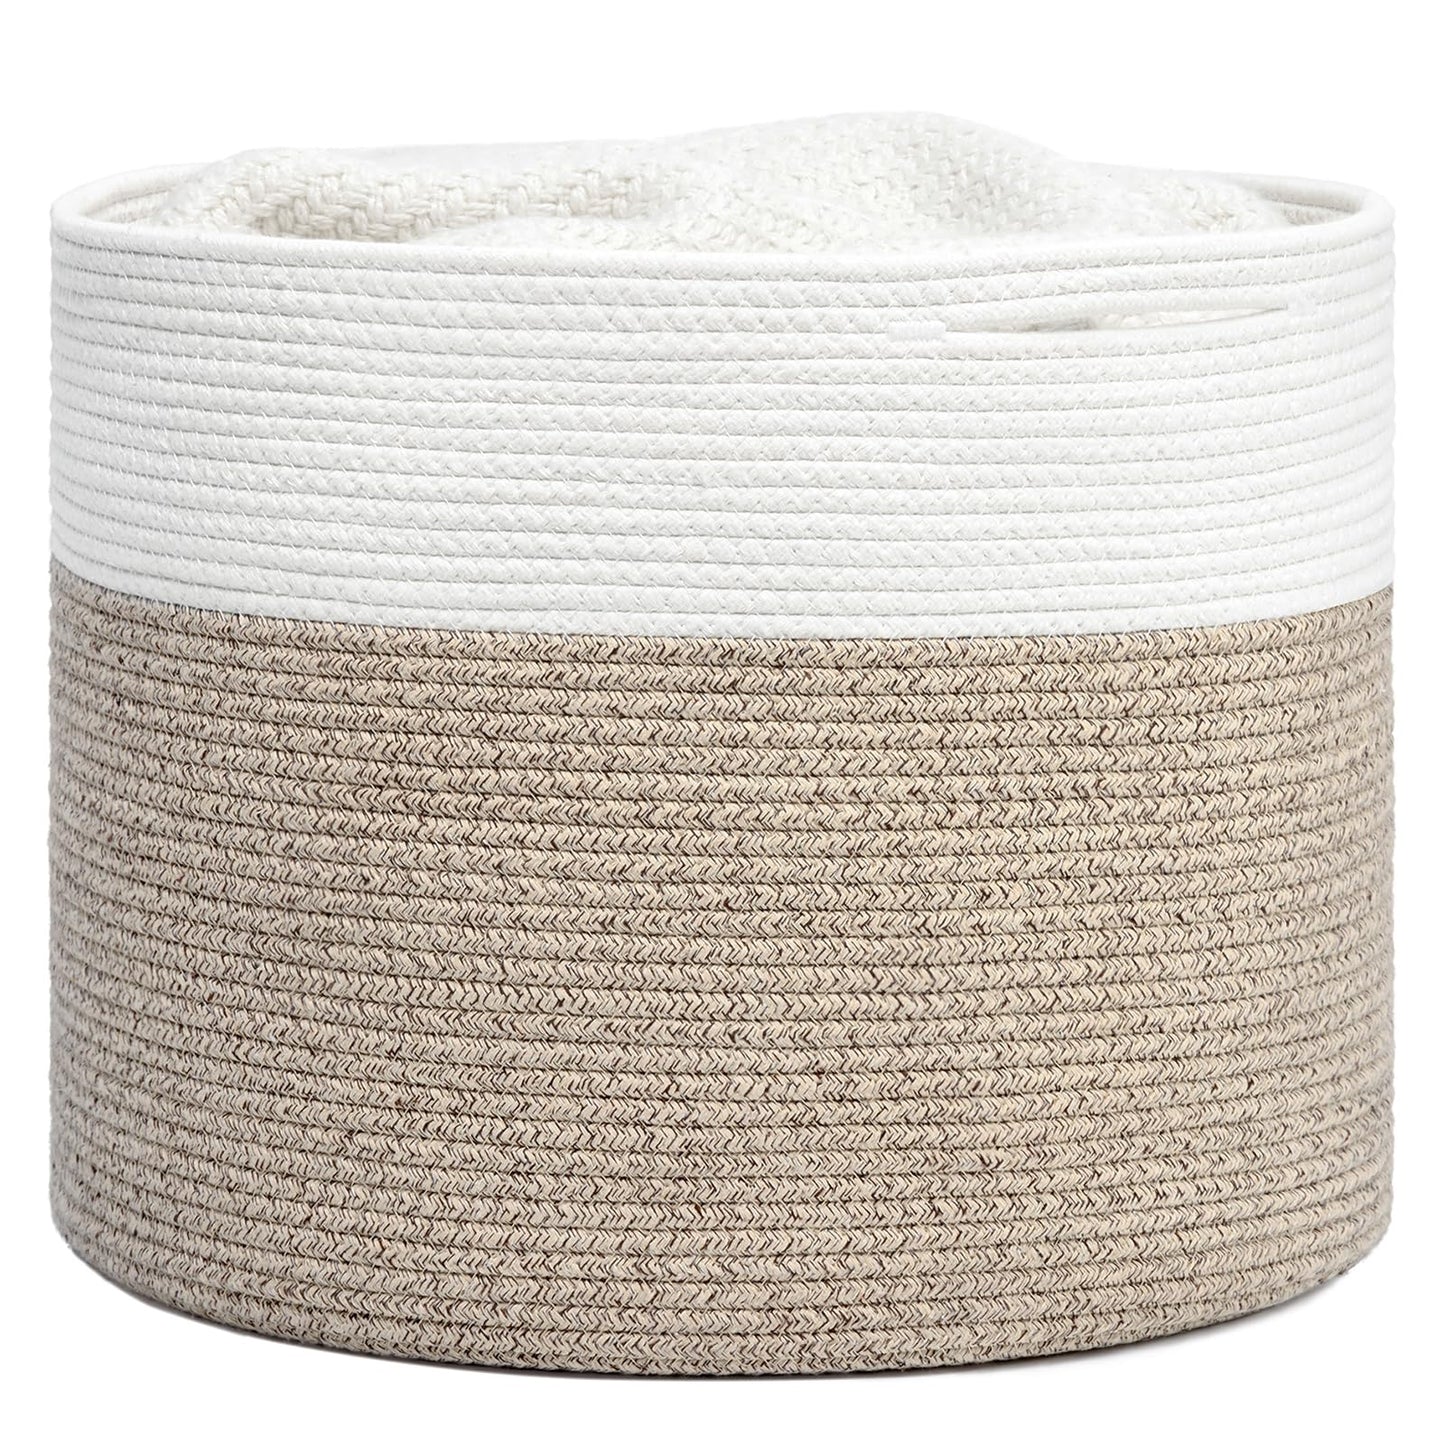 Large Cotton Rope Basket, Durable